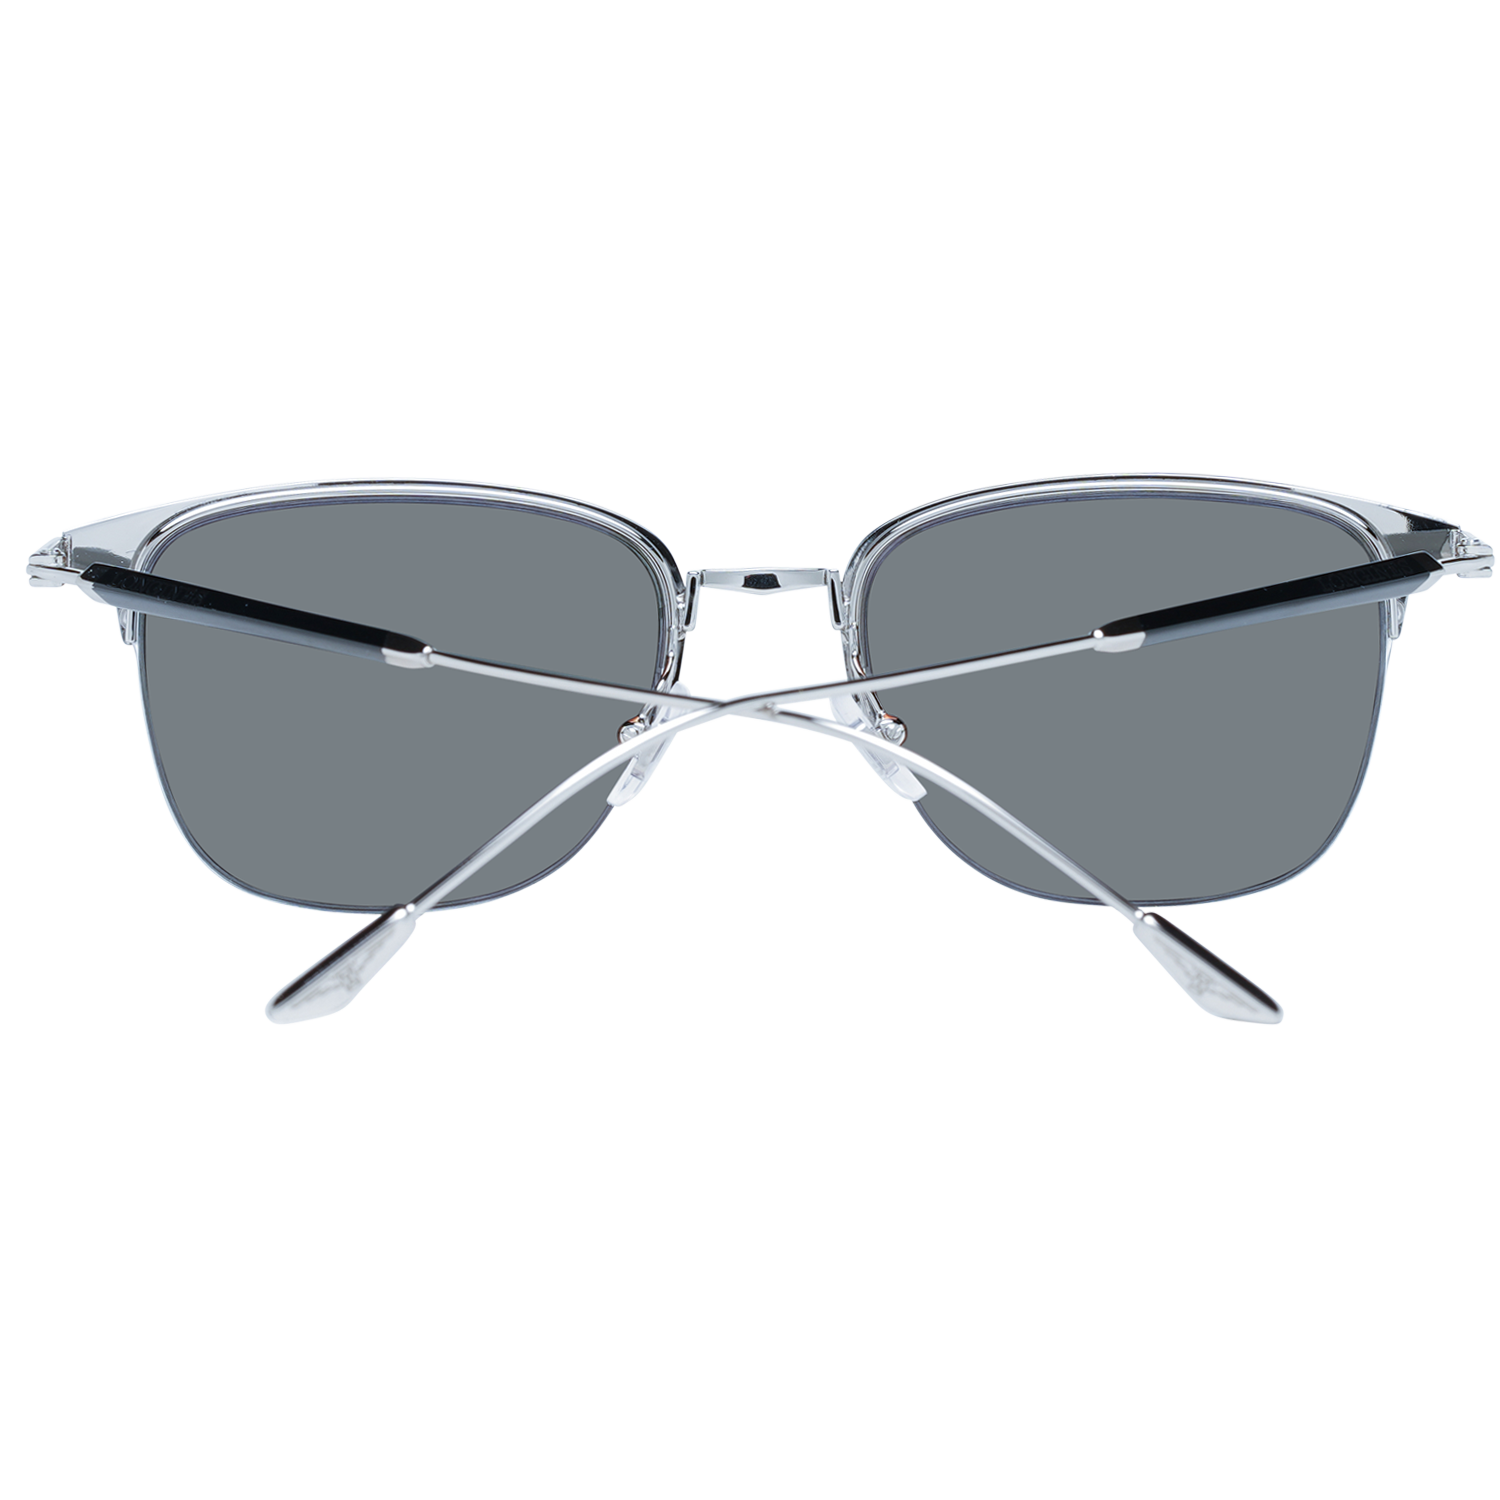 Longines Sunglasses Longines Sunglasses LG0022 01A 53mm Eyeglasses Eyewear UK USA Australia 